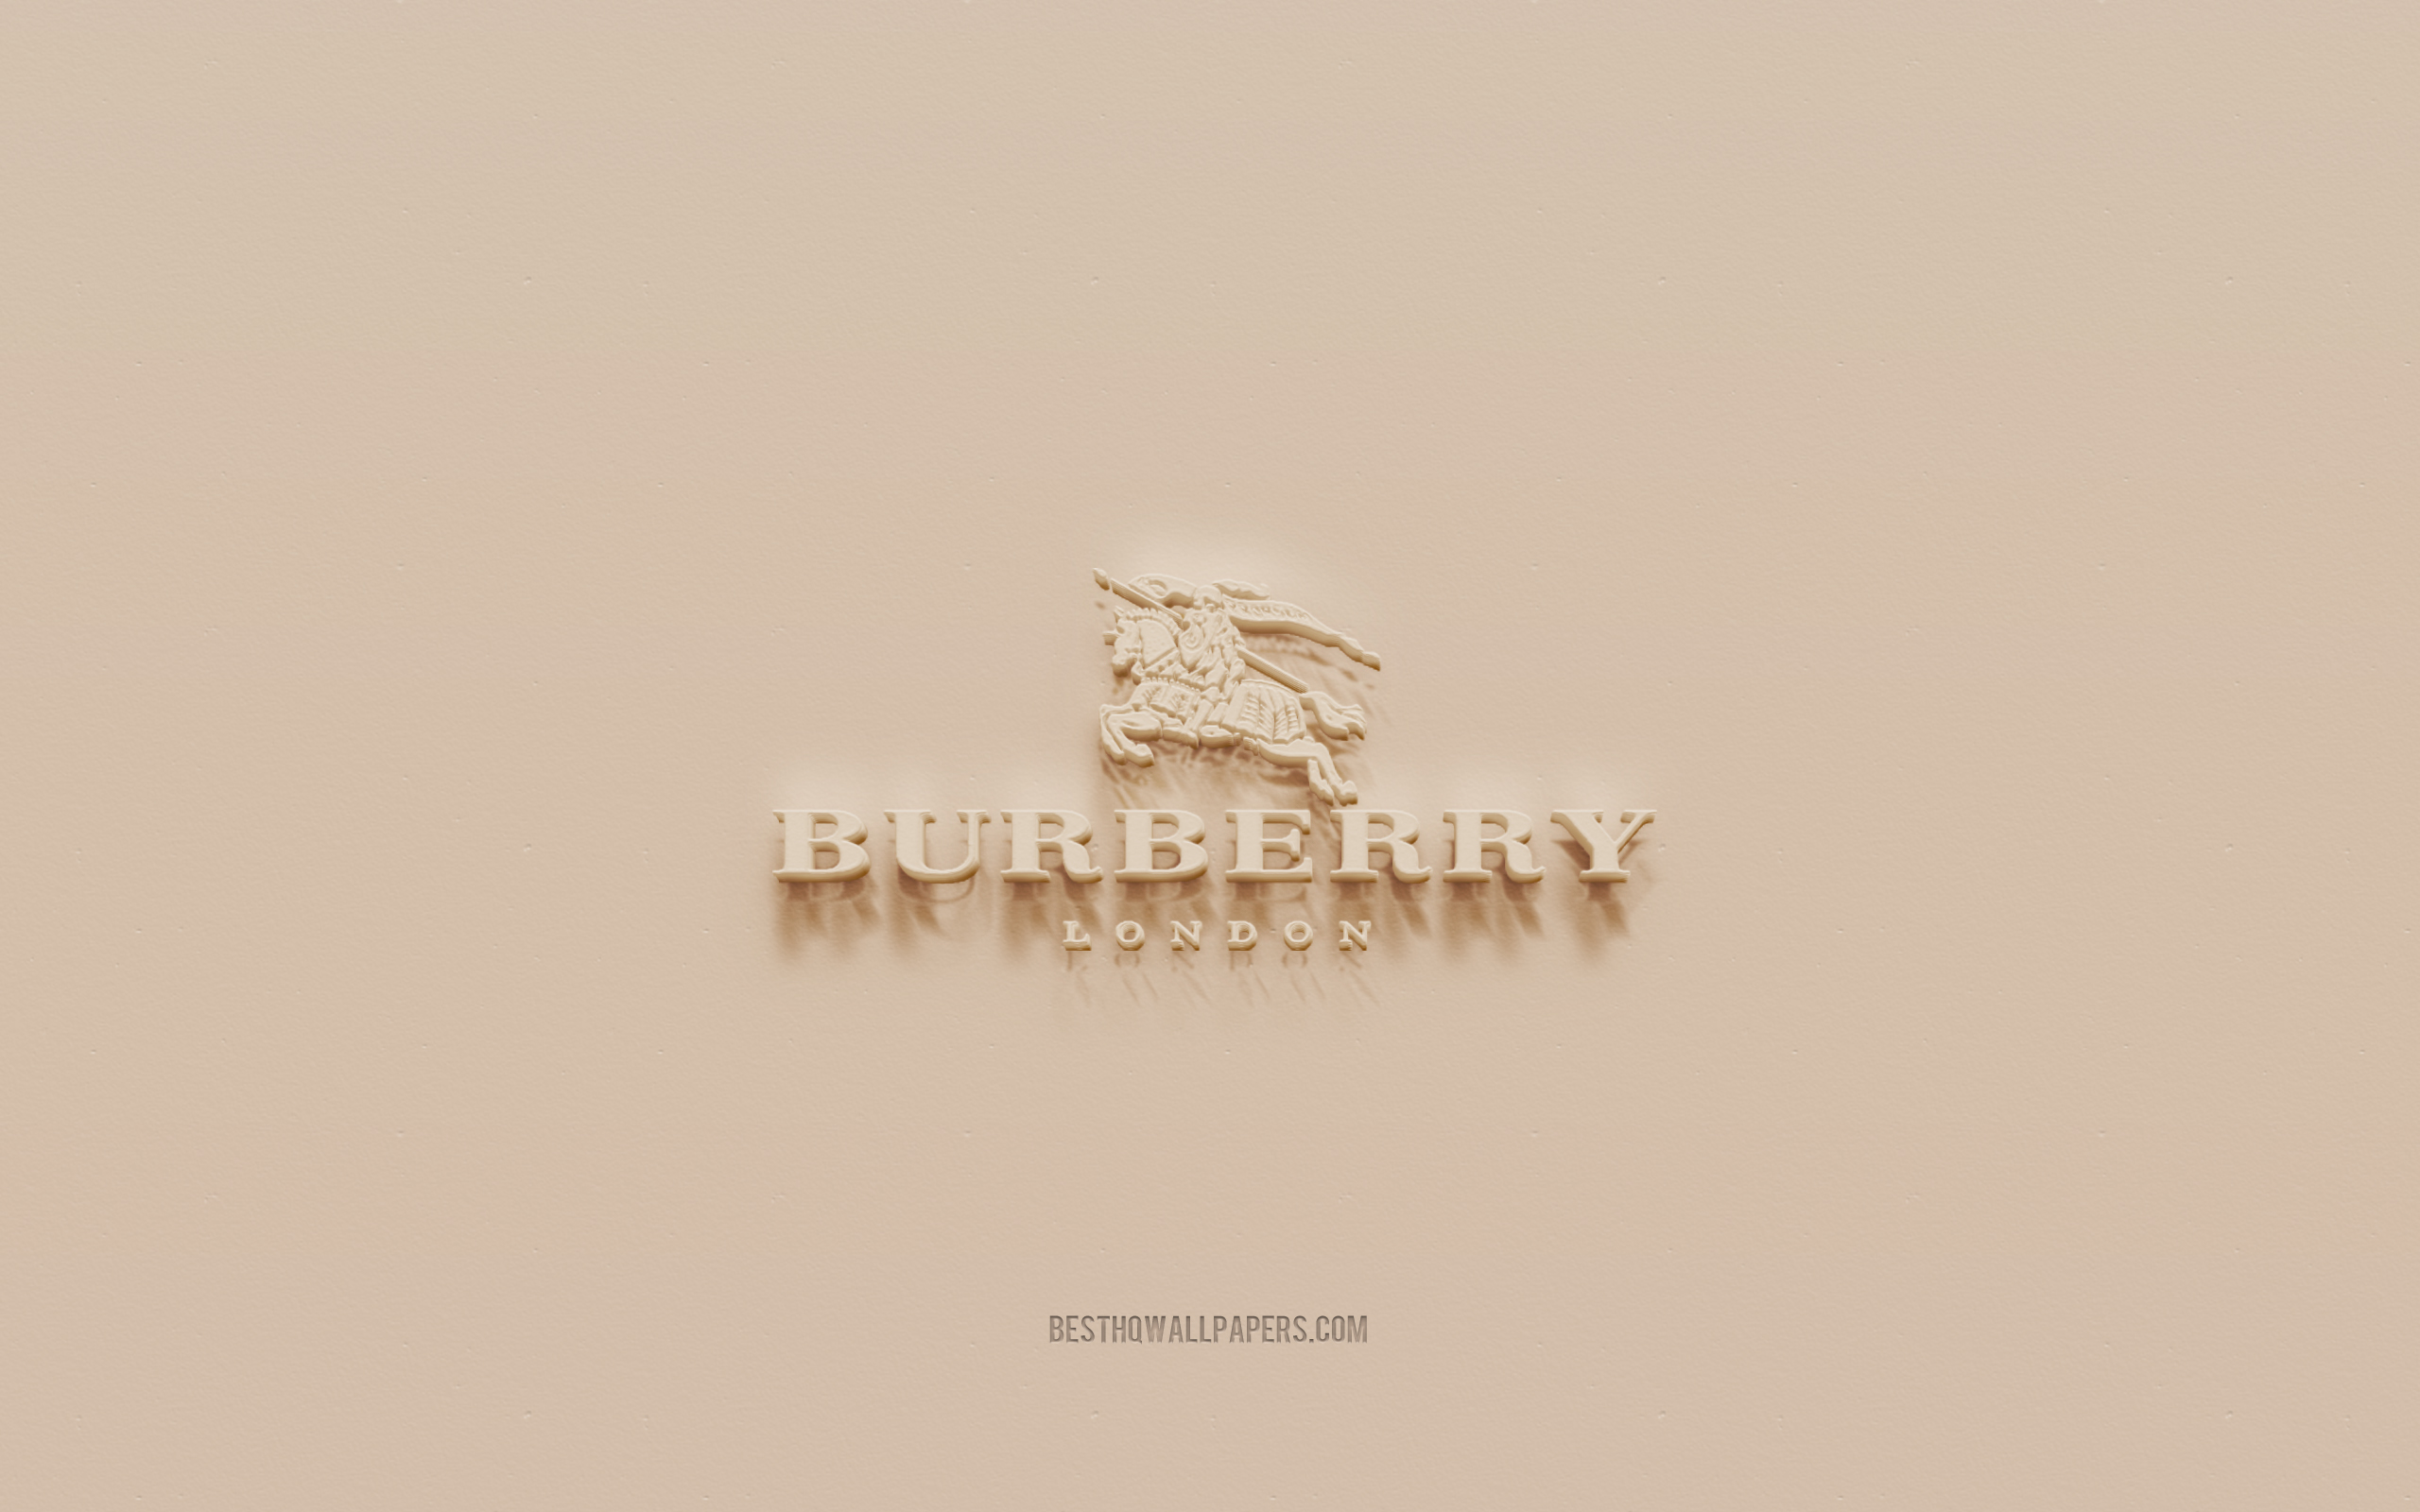 Burberry Logo Wallpaper